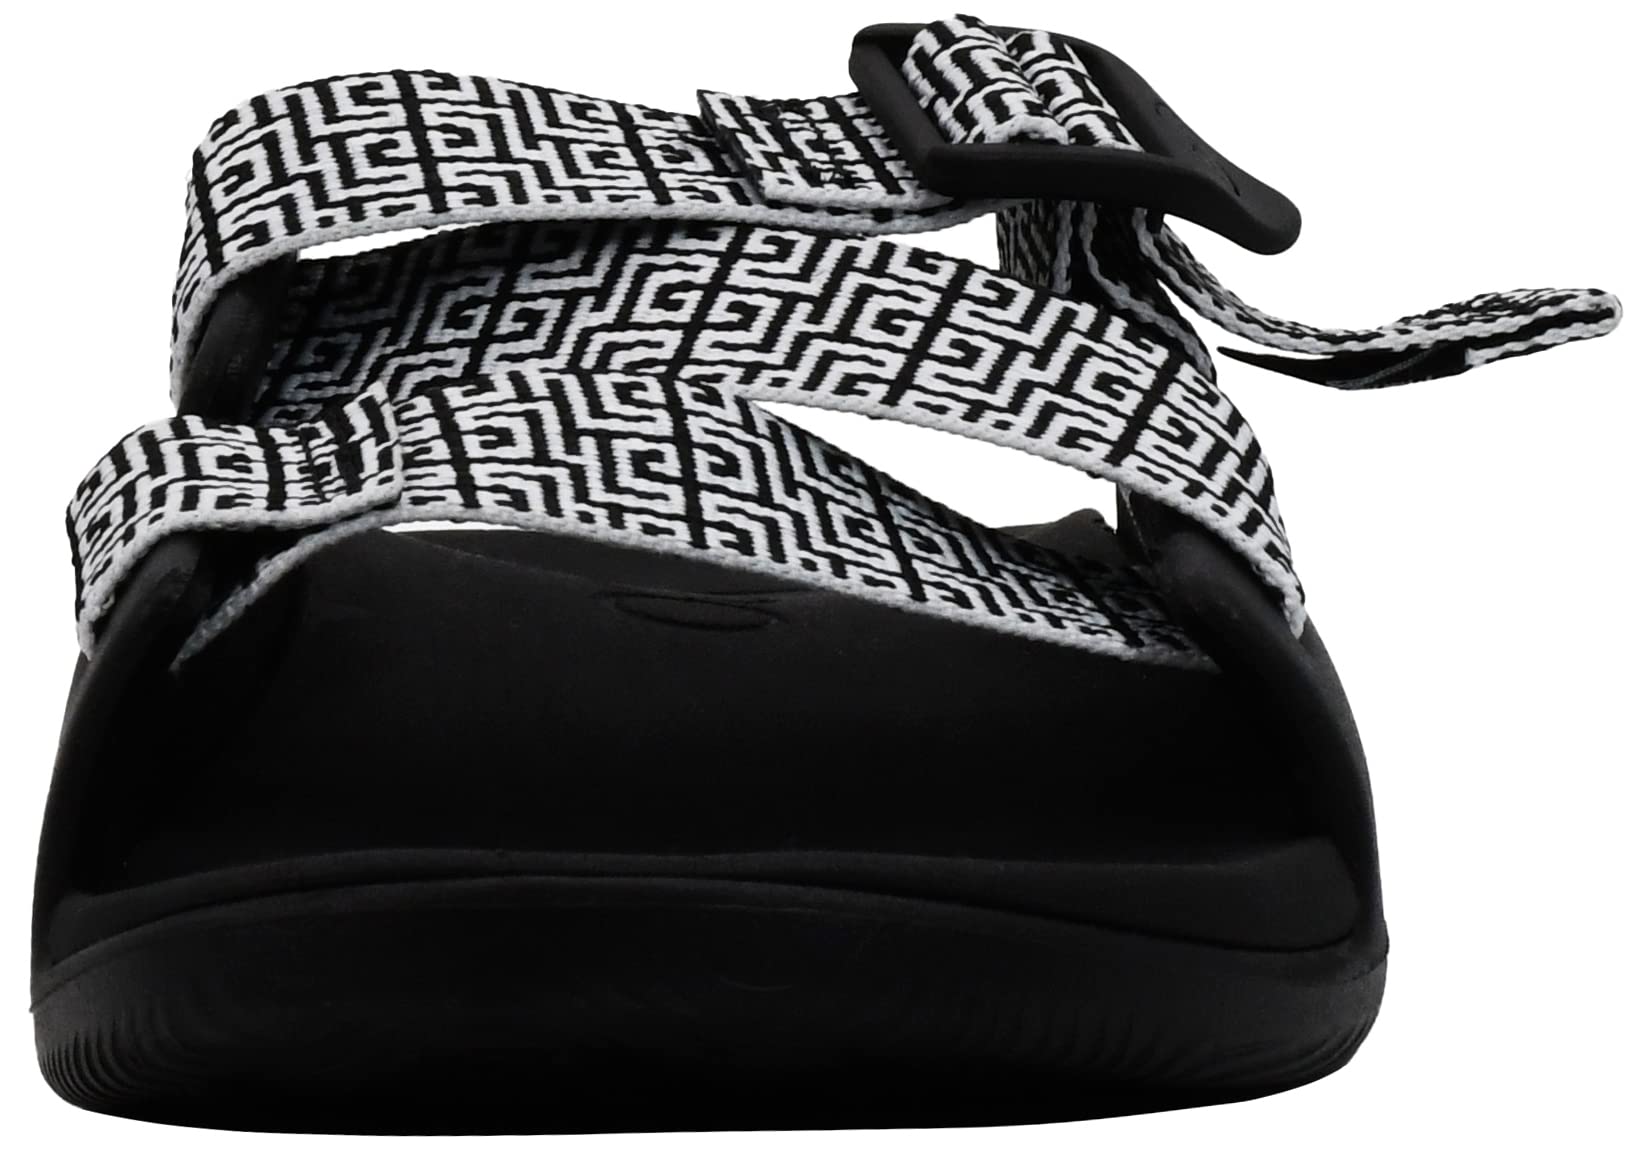 Chaco Women's Chillos Tangle Black Slide Sandal 8 M US